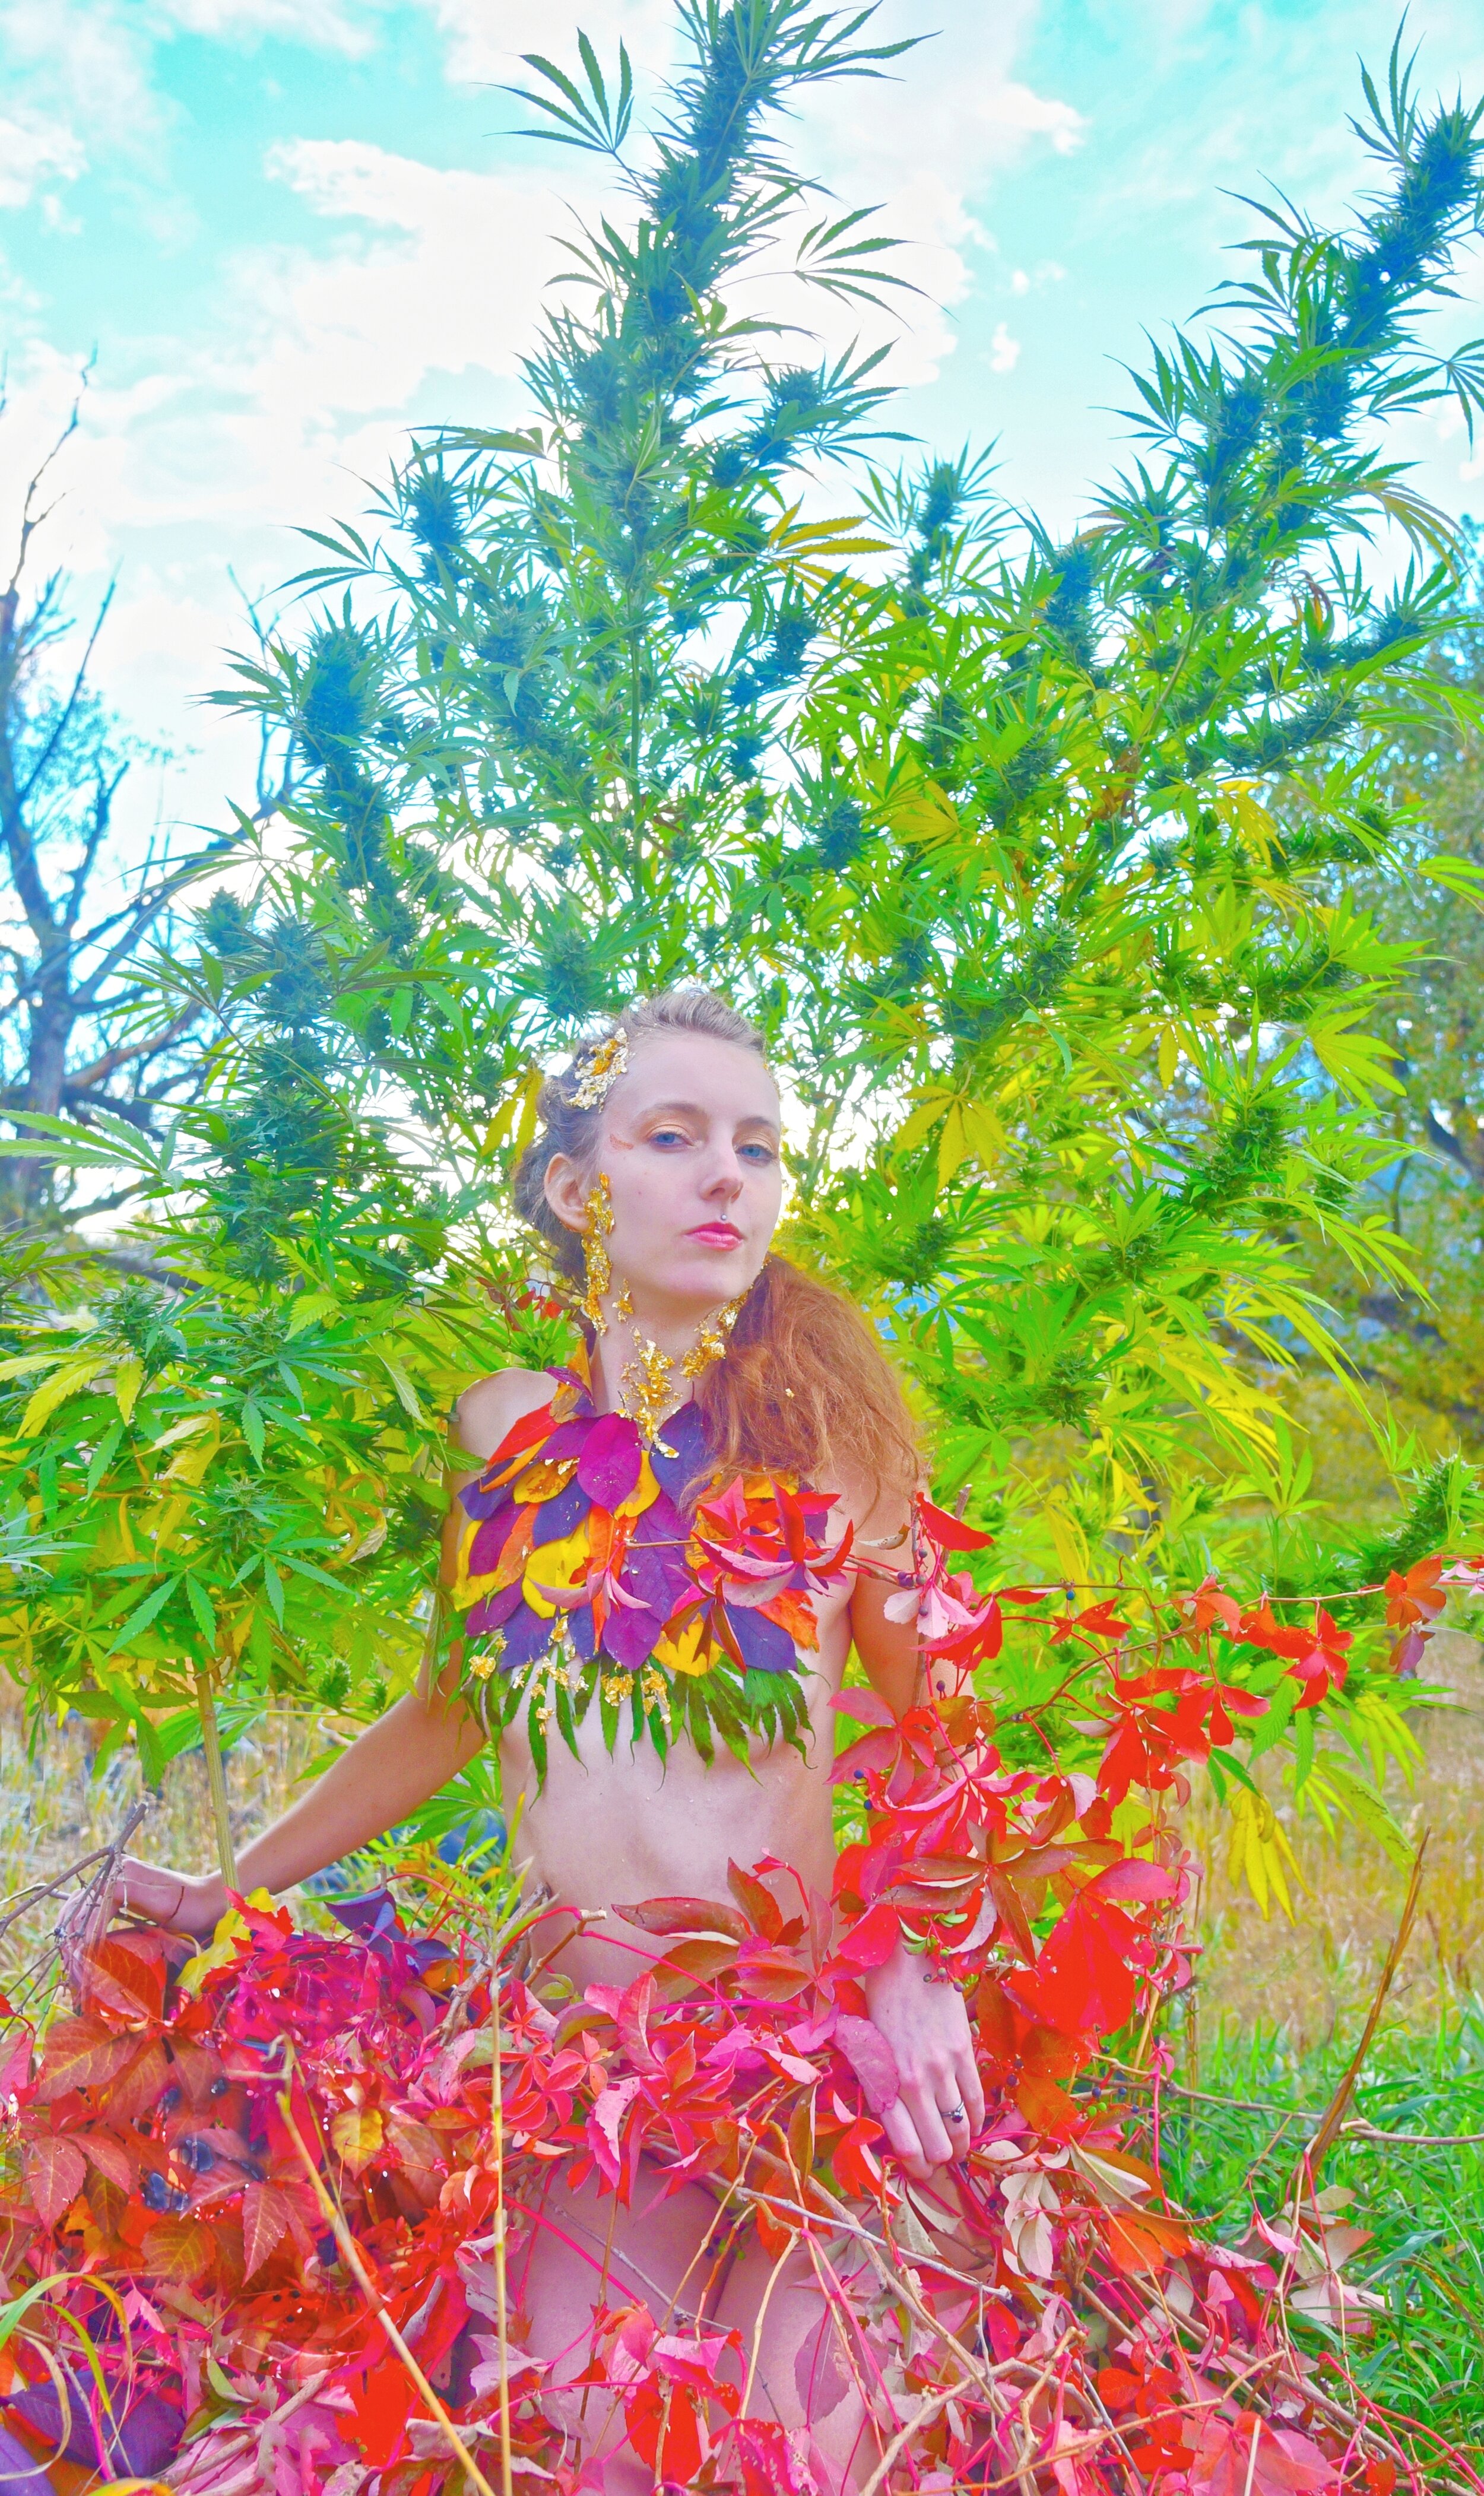 Fall Harvest Fairy Carly Carpenter Photography & Sarah Bender.jpg